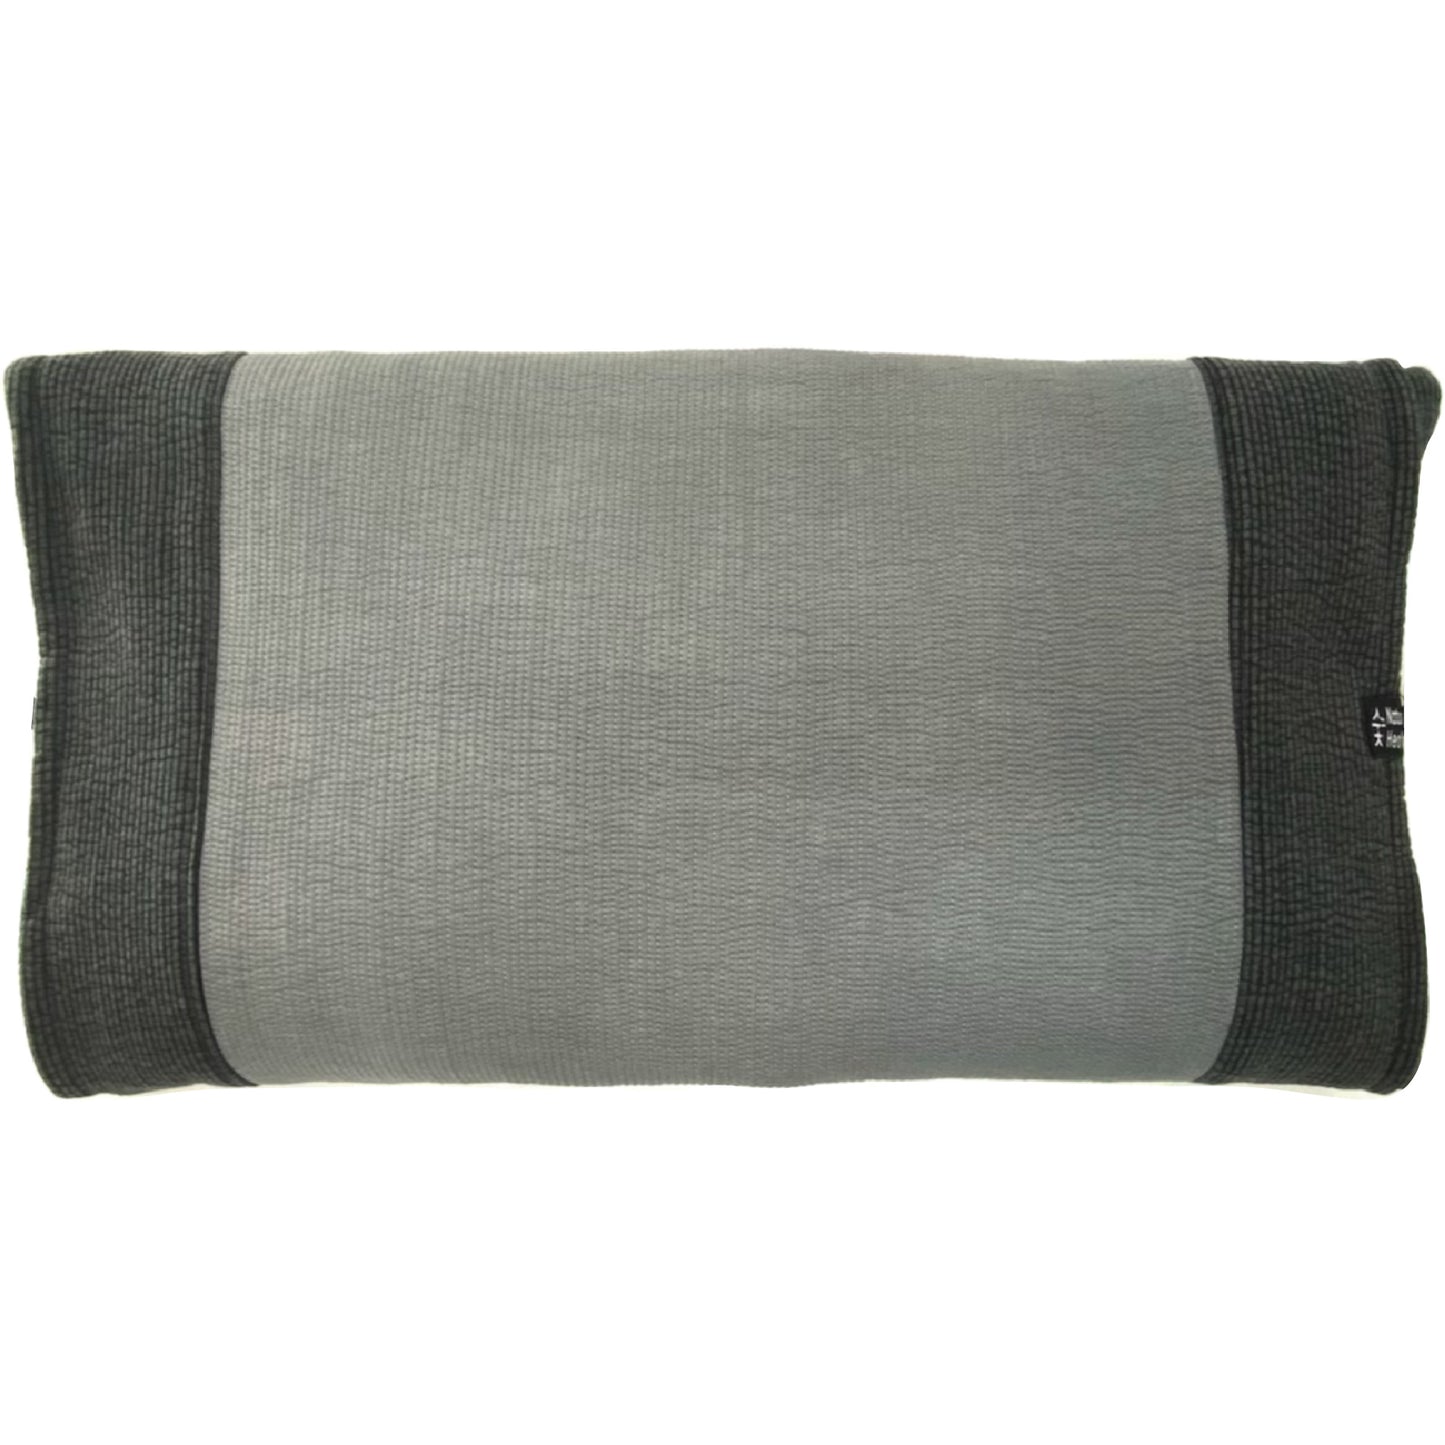 Charcoal Pillow 숯베개